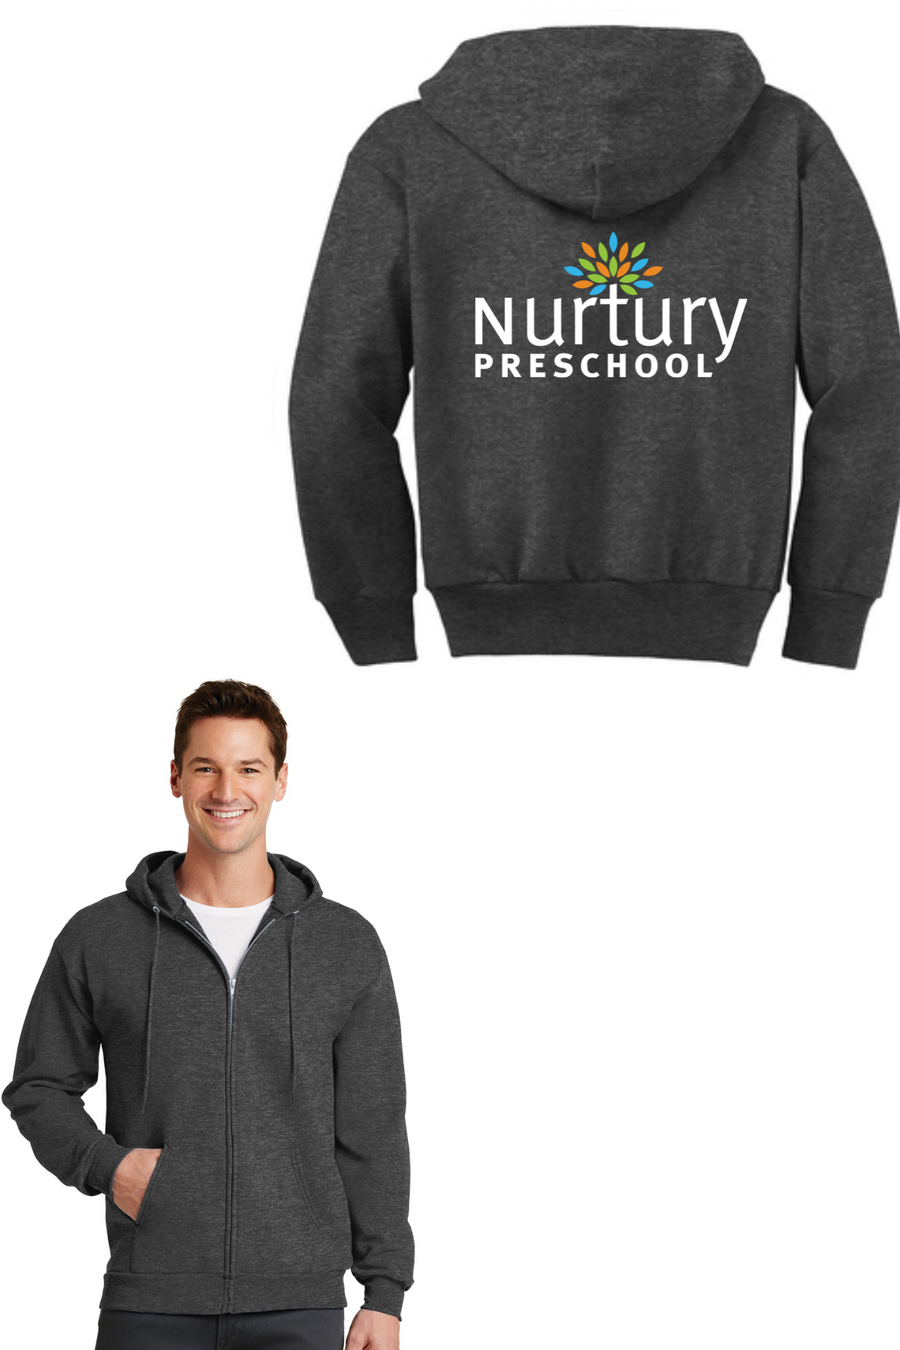 Nurtury Preschool at Moraga Valley Presbyterian Church On-Demand-Unisex Full-Zip Hooded Sweatshirt